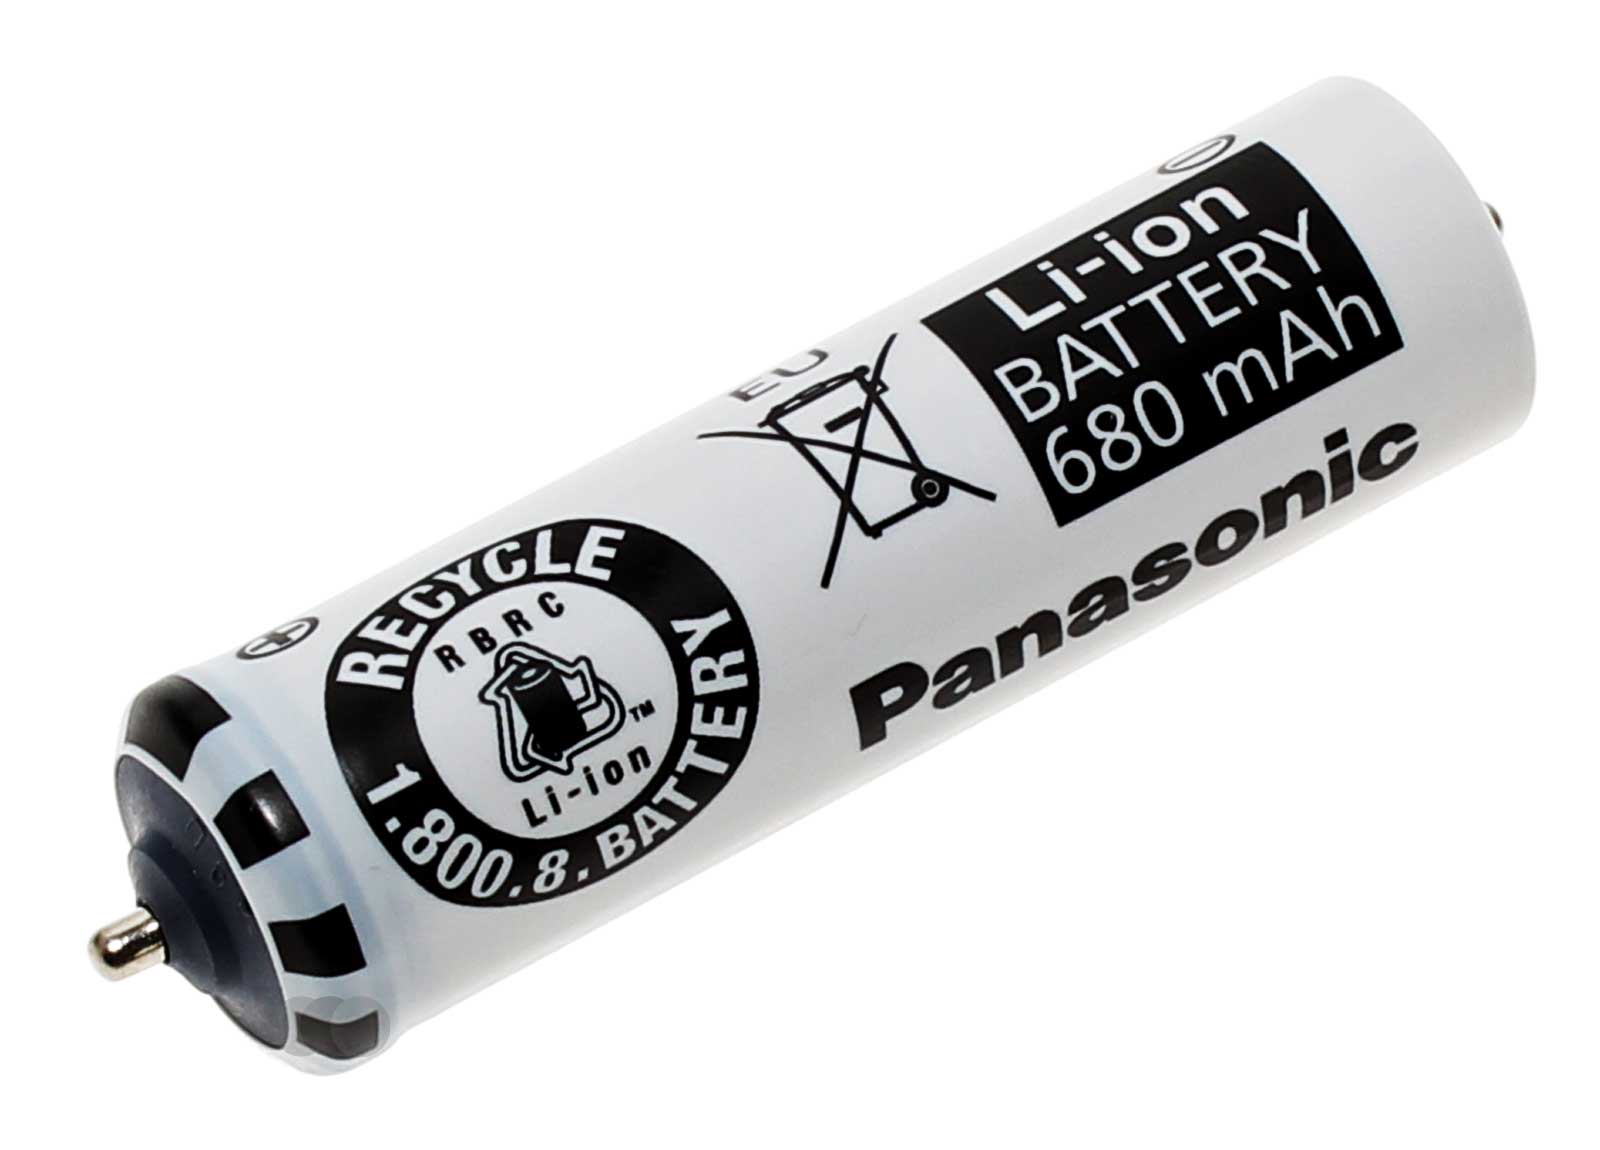 Li Ion Battery For Panasonic Er Gp80 Weslv 95l2508 680mah Ebay | Free ...